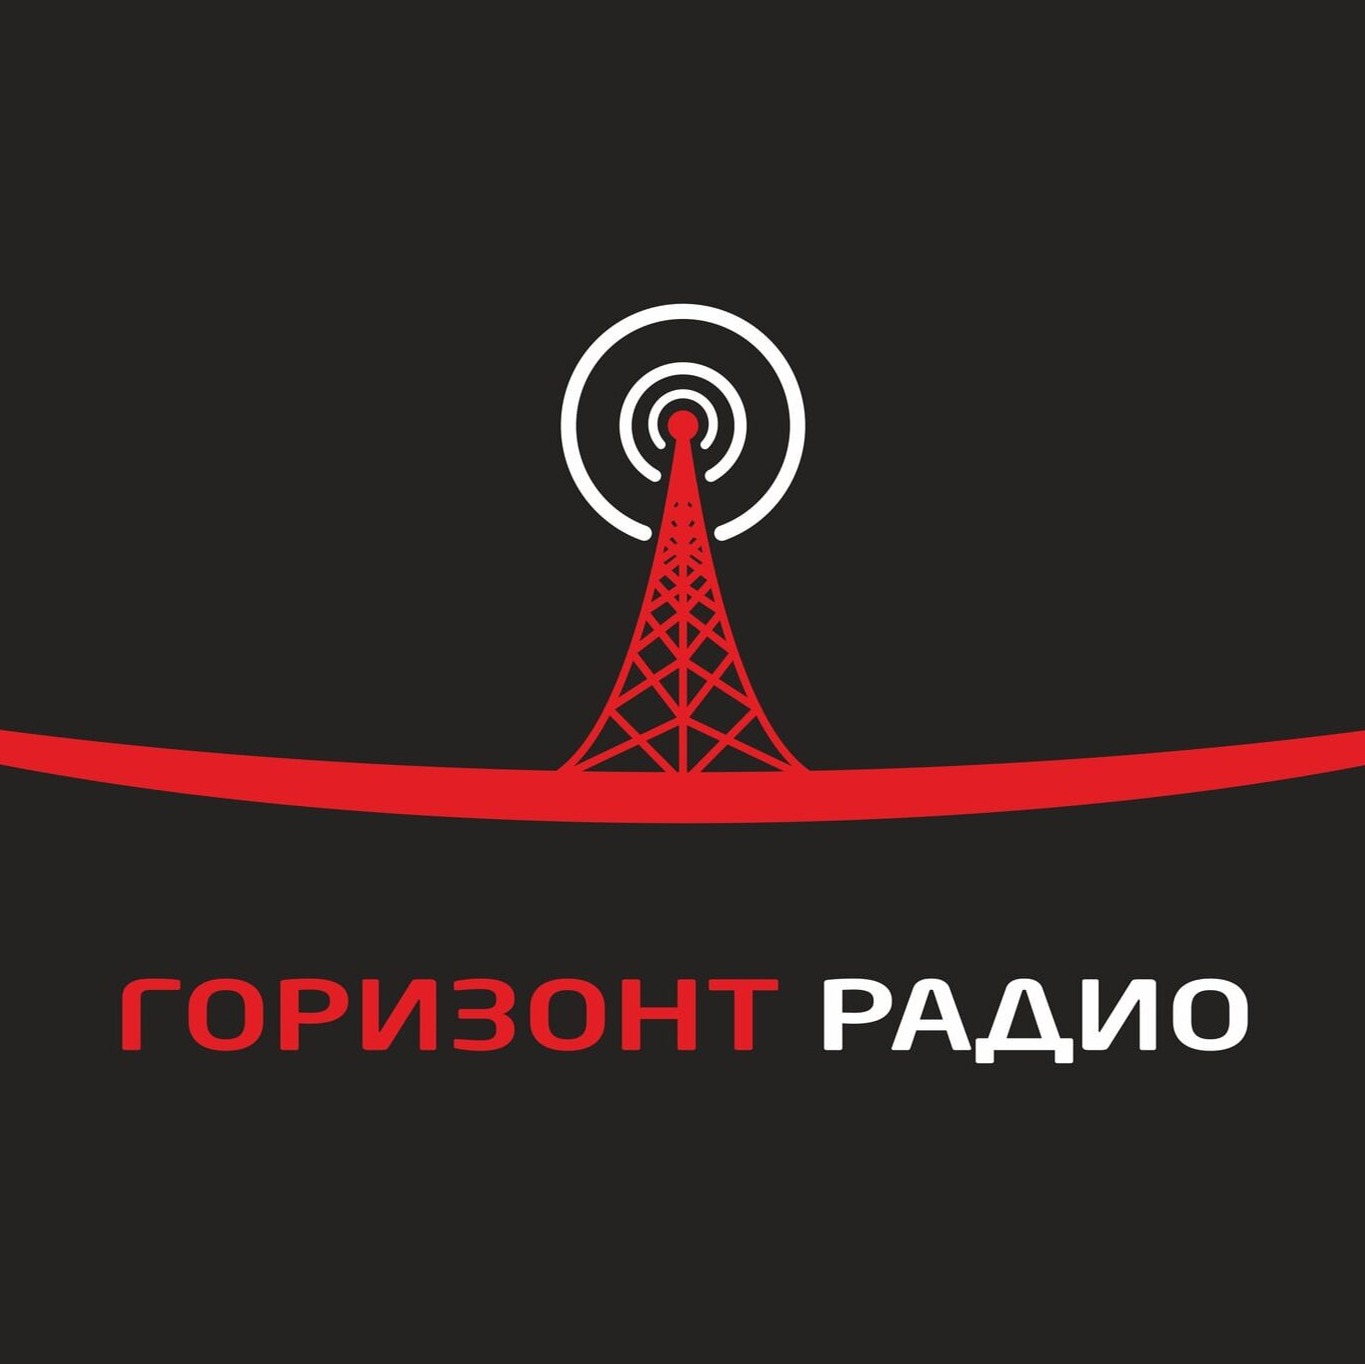 Включи радио русь. Радио Горизонт. Горизонт радио сервис Ростов. Логотип радио Горизонт. Логотип радиоприёмника Горизонт.